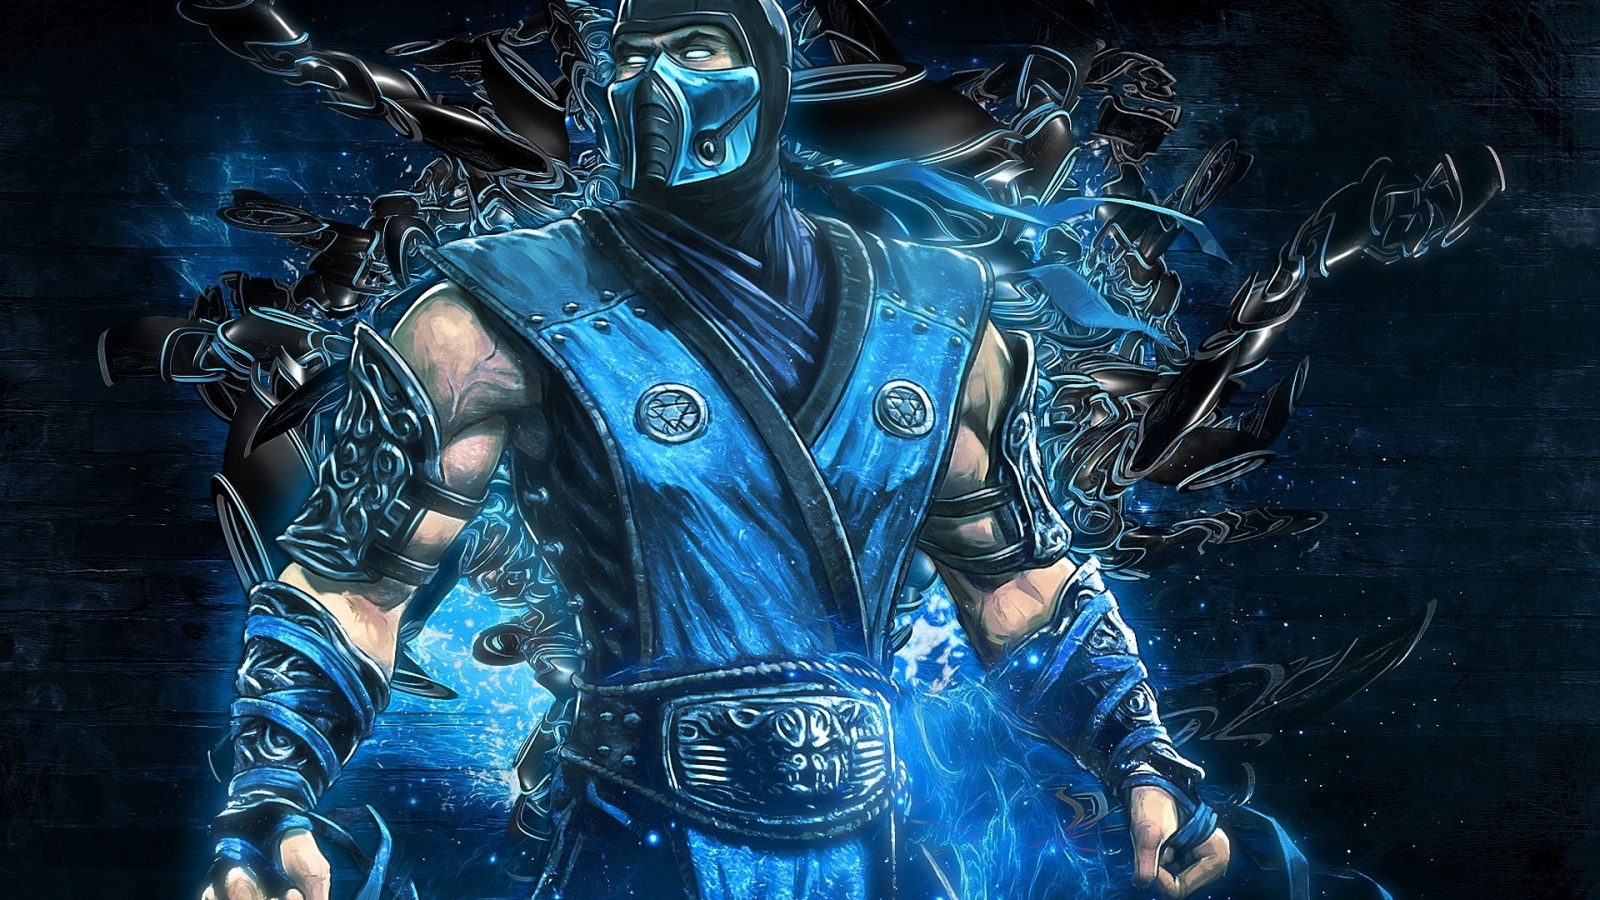 Mortal Kombat Subzero for 1600 x 900 HDTV resolution